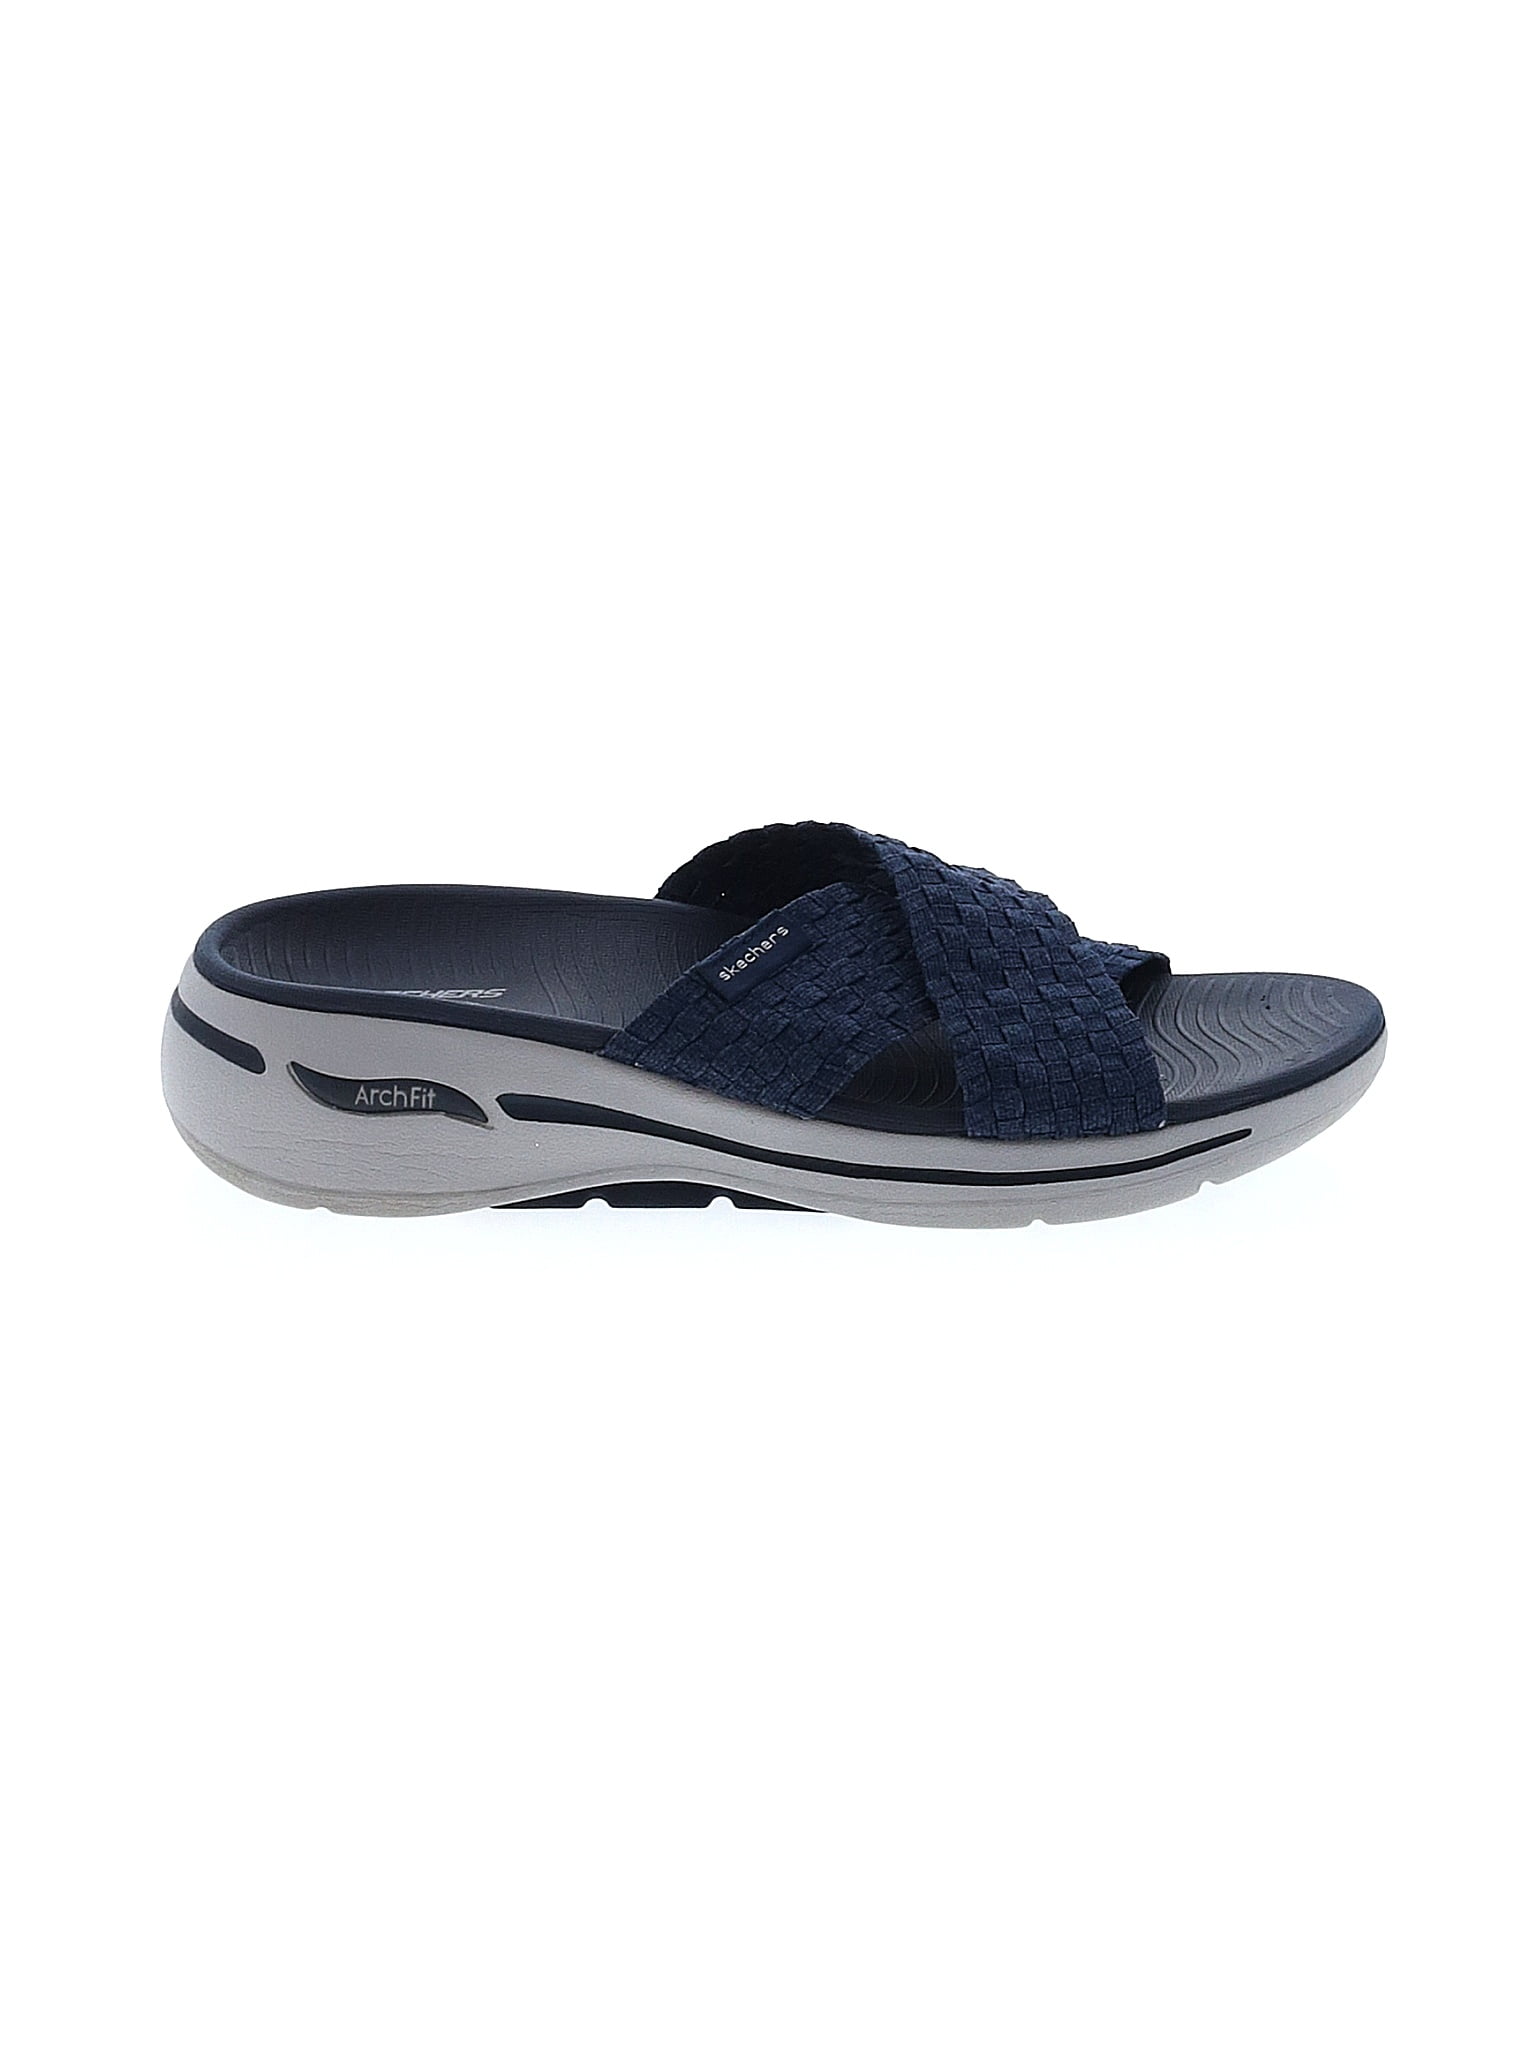 Skechers Solid Navy Blue Sandals Size 8 - 59% off | thredUP